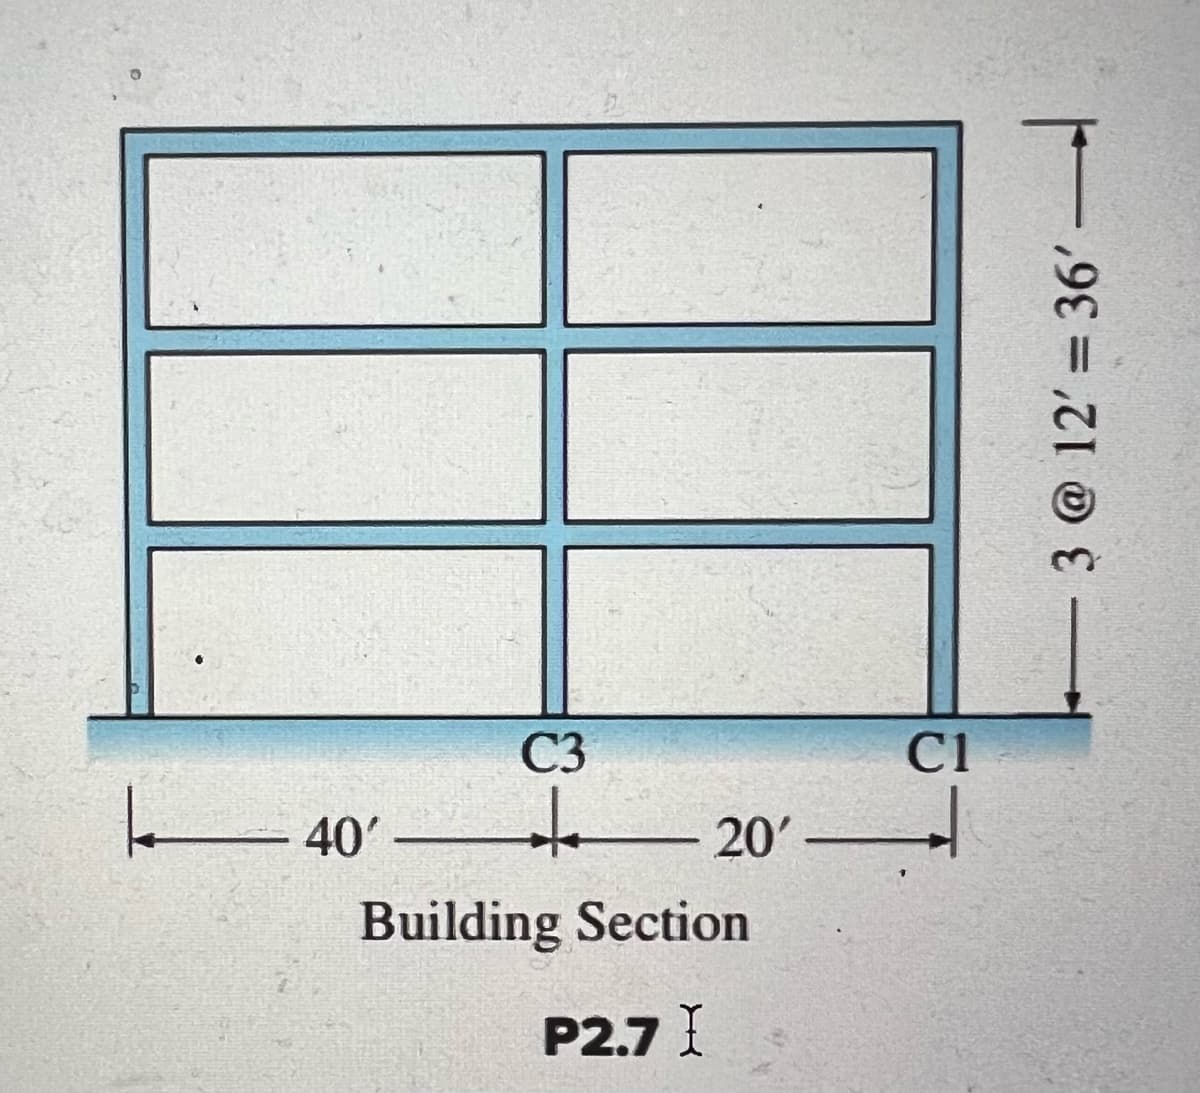 40'
C3
+
20'
Building Section
P2.7 I
C1
1
3 @ 12' 36'